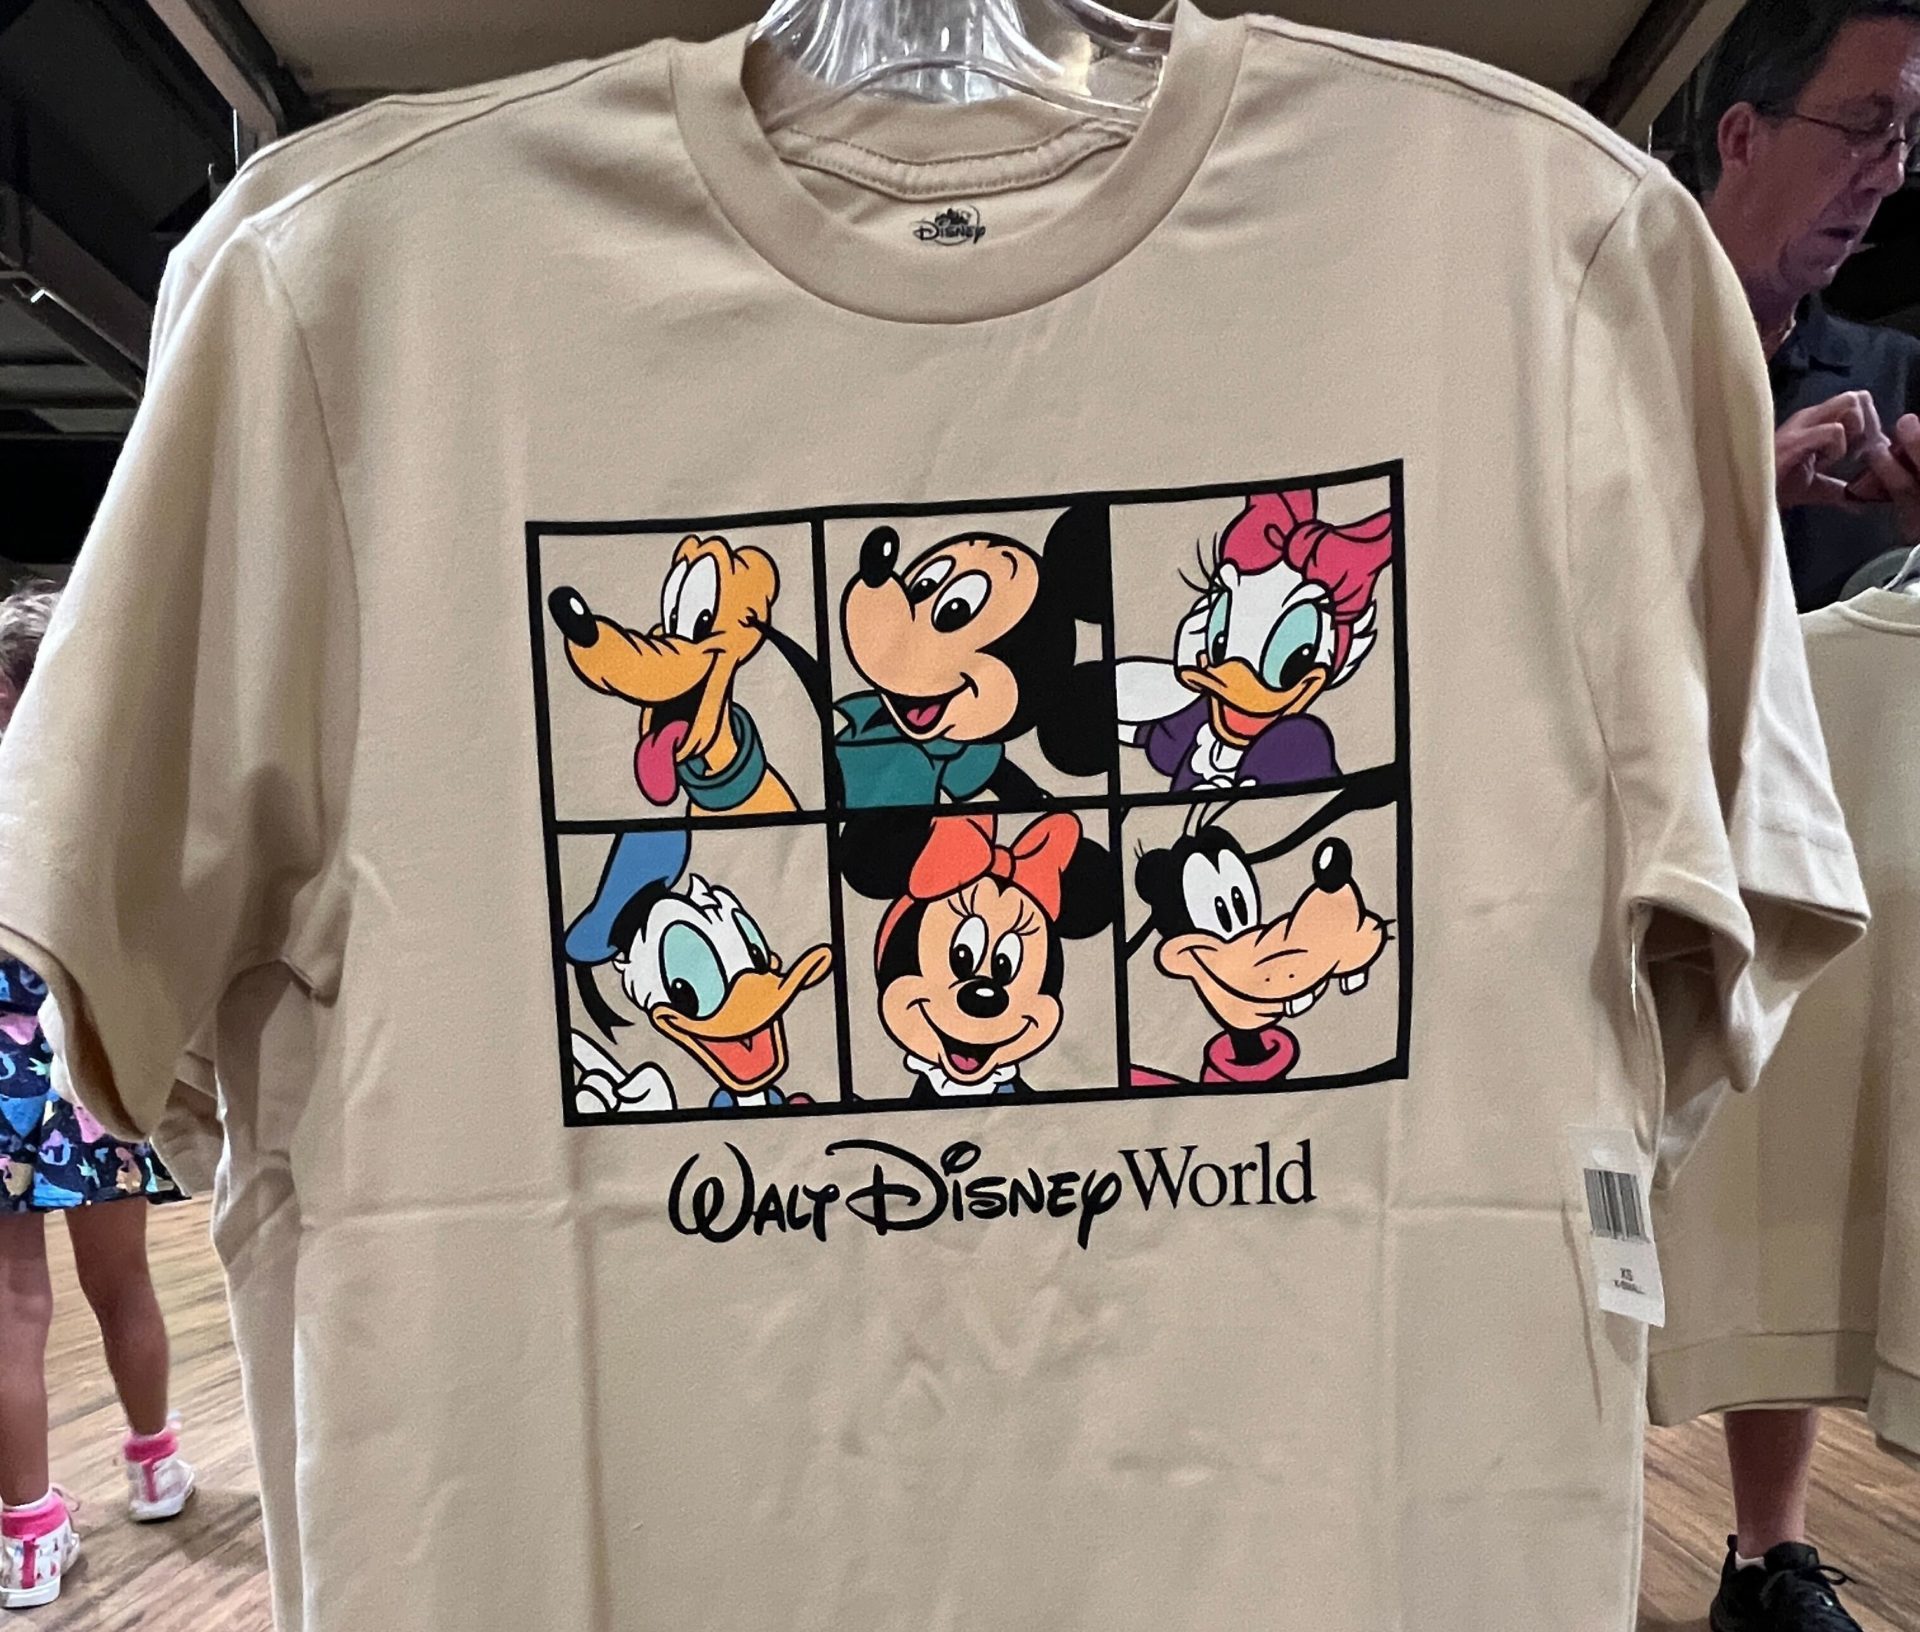 Retro Animal Kingdom Mickey And Friends Shirt, Disneyland Long